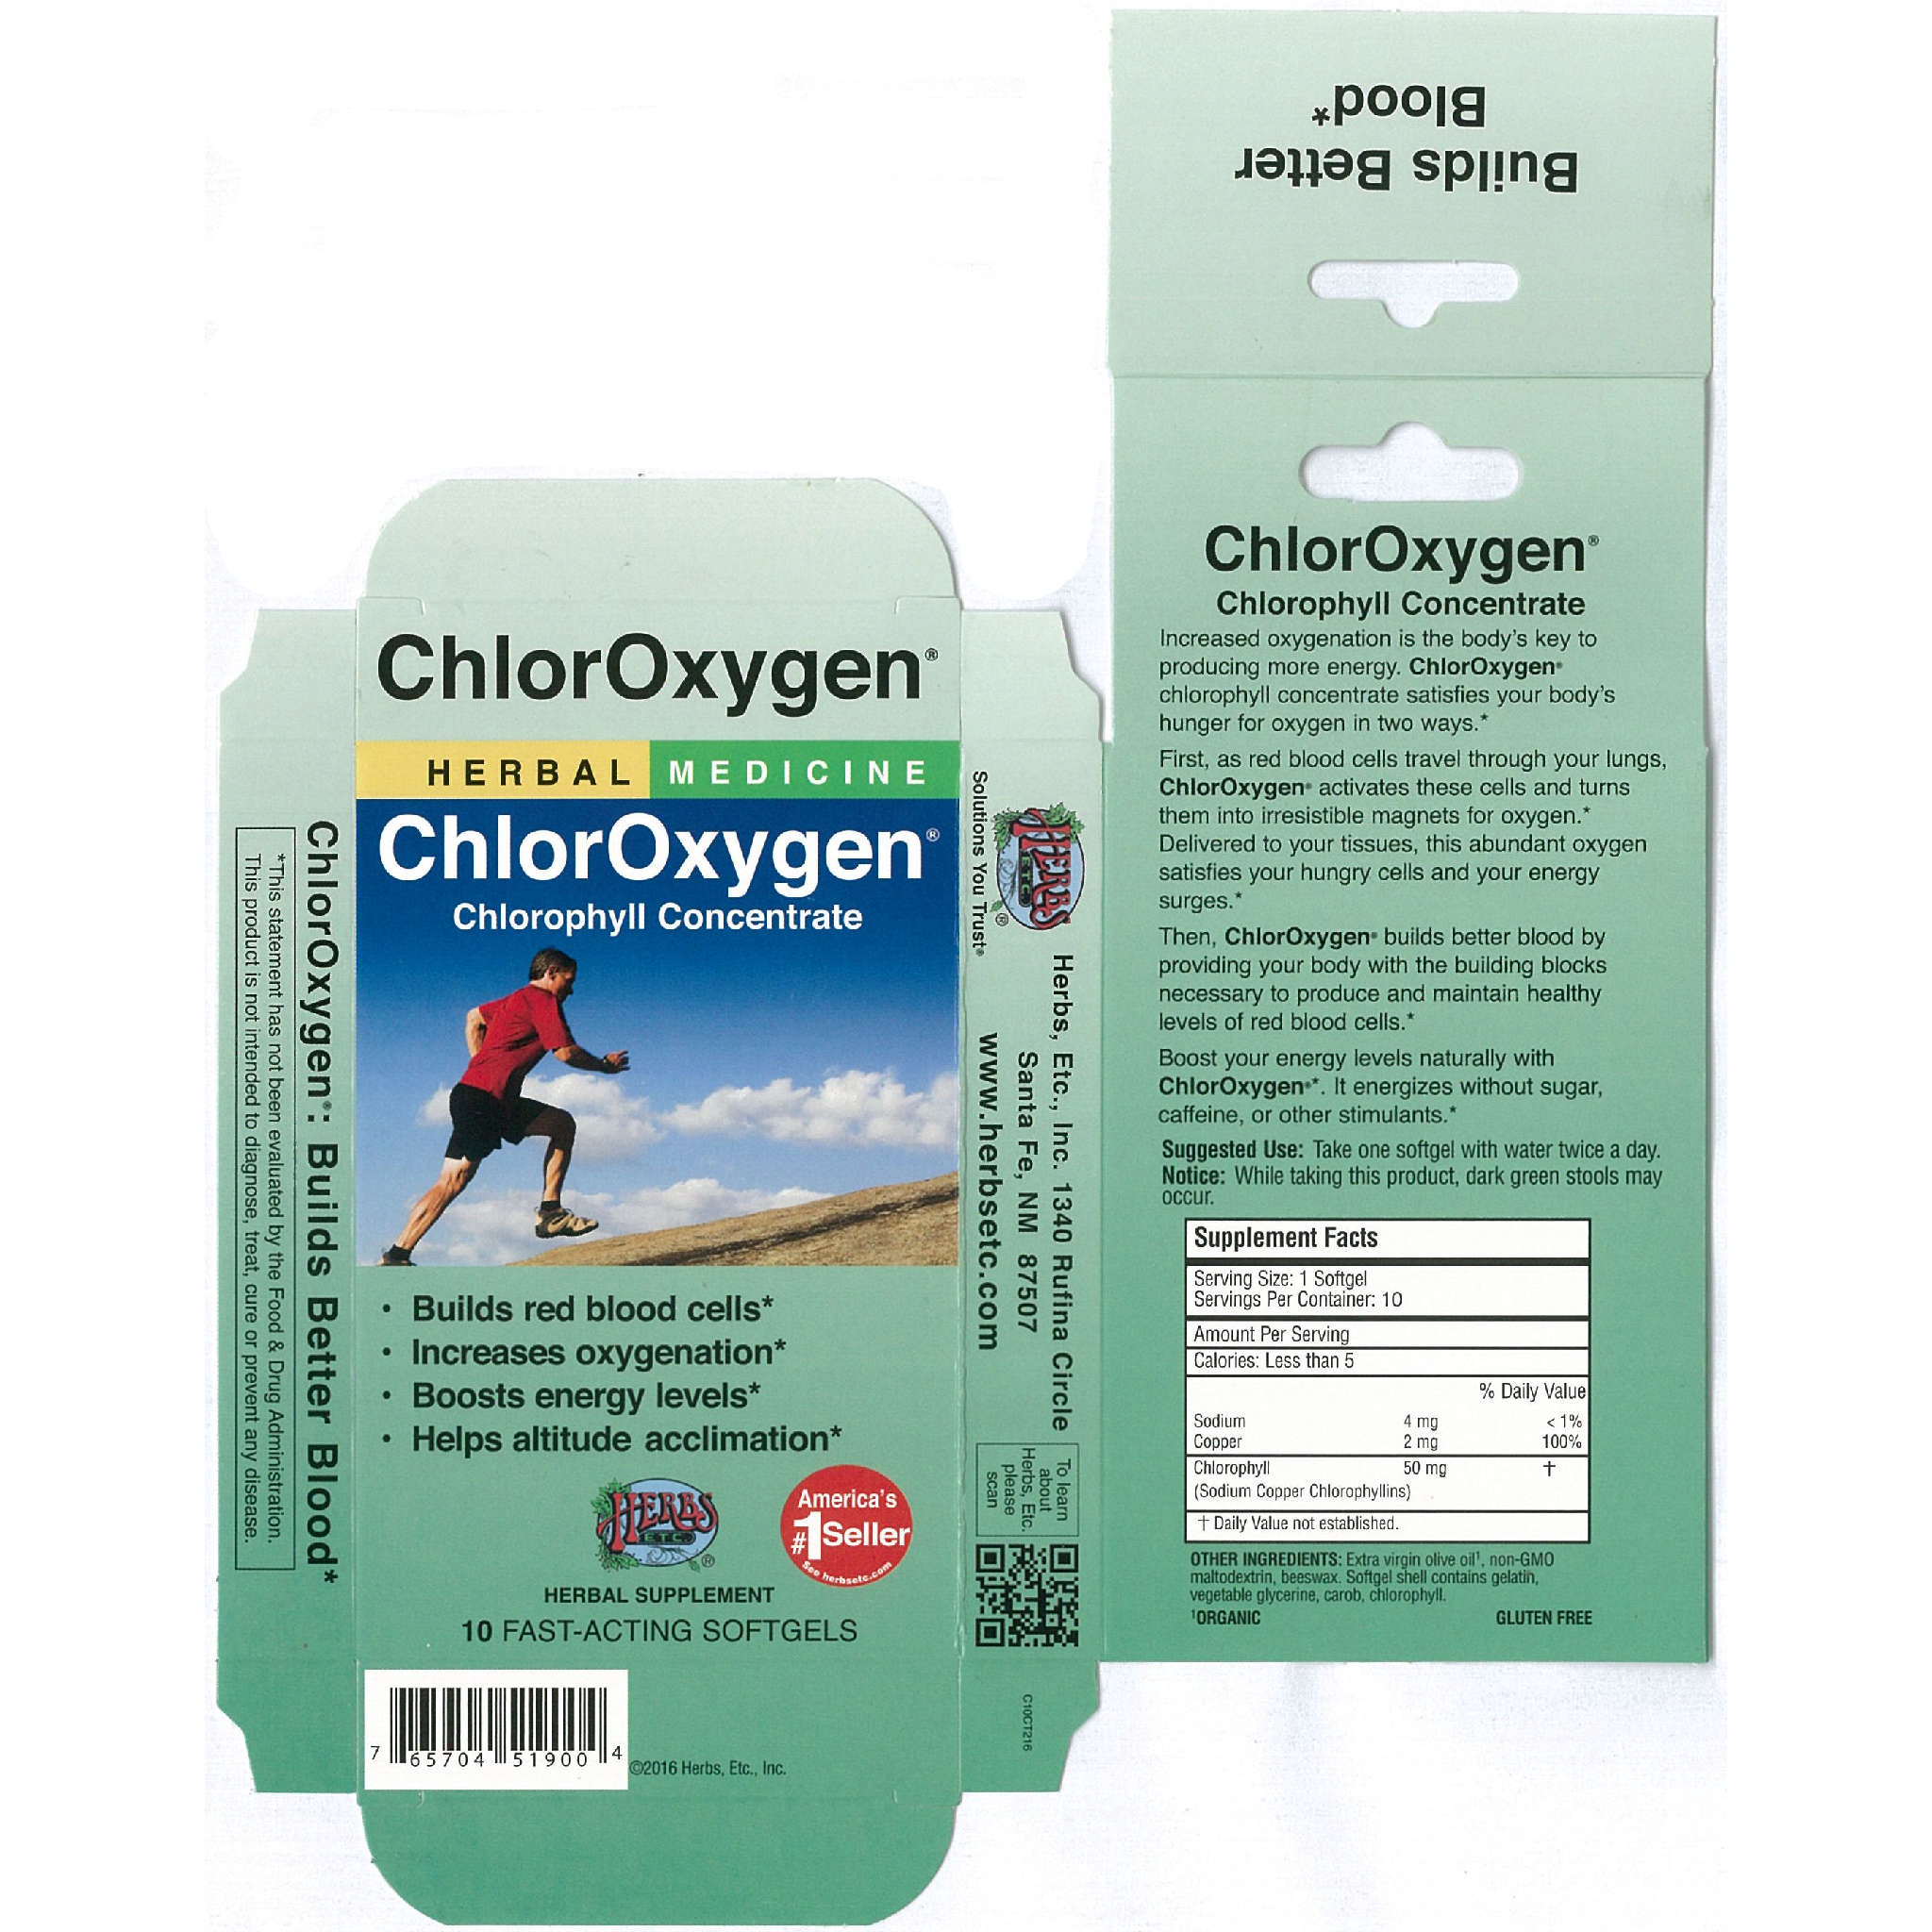 Herbs Etc - Chloroxygen softgel